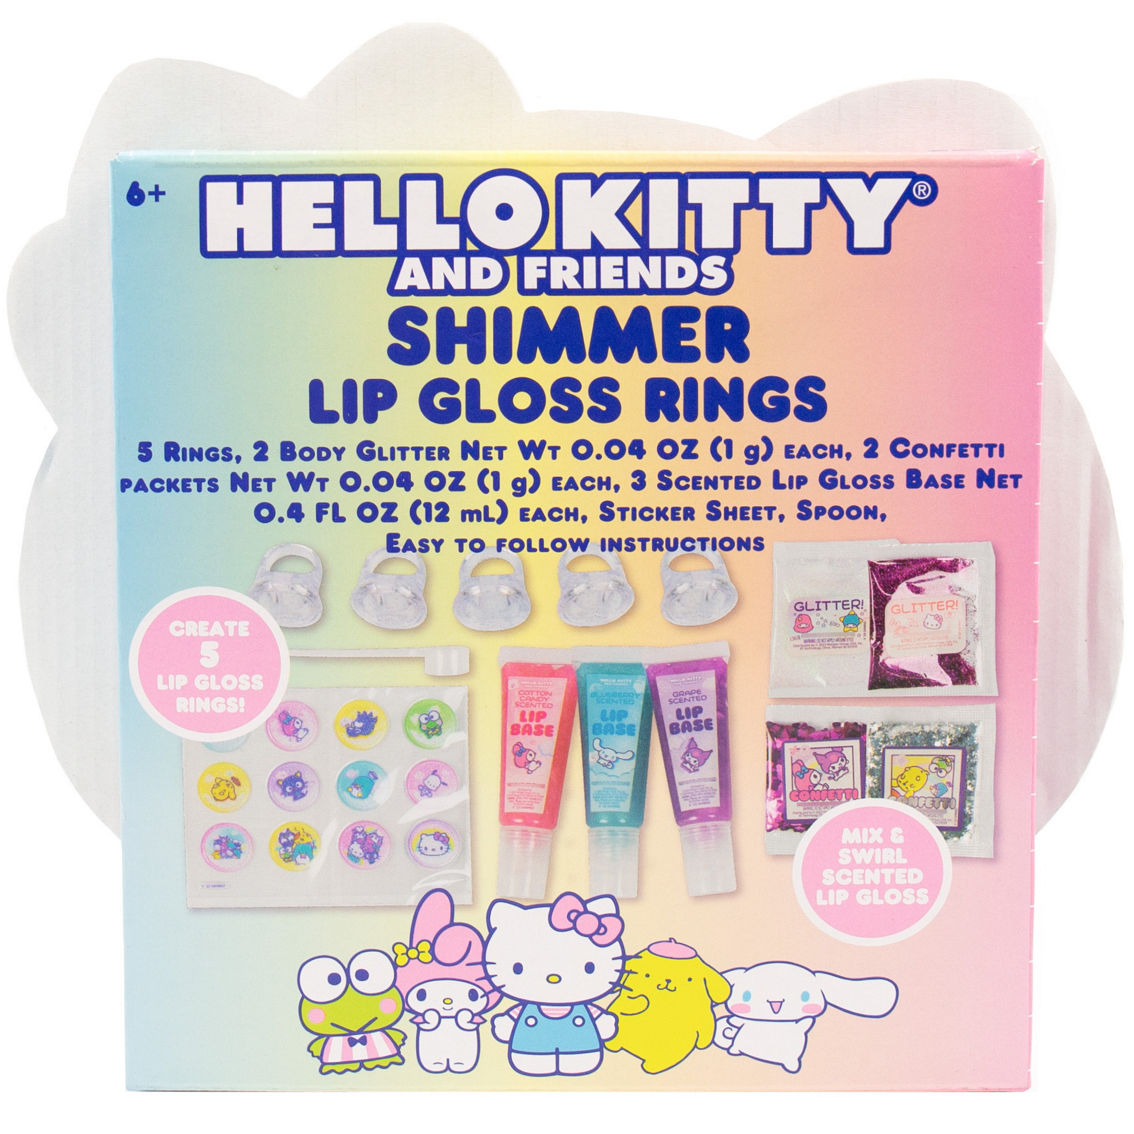 Hello Kitty Shimmer Lip Gloss Rings Beauty Kit - Image 2 of 5